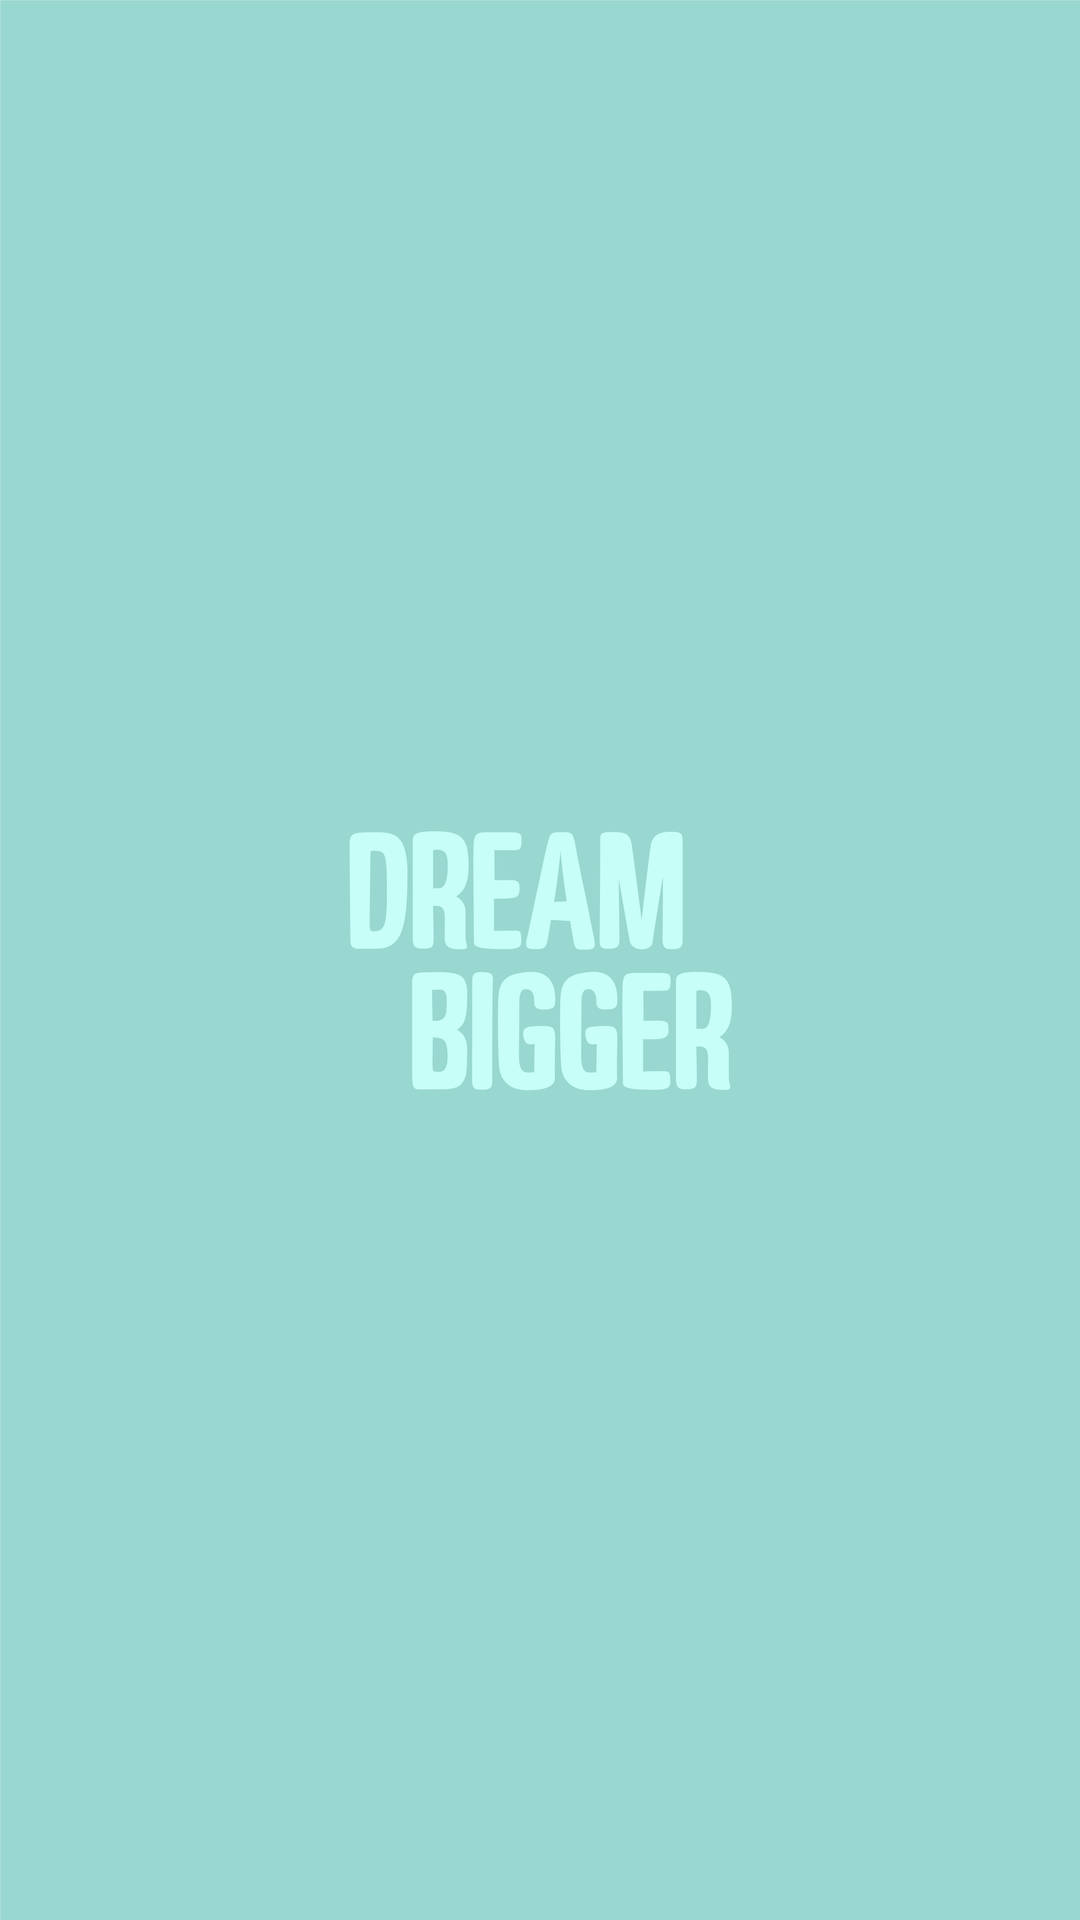 Minimalist Motivational Big Dreams